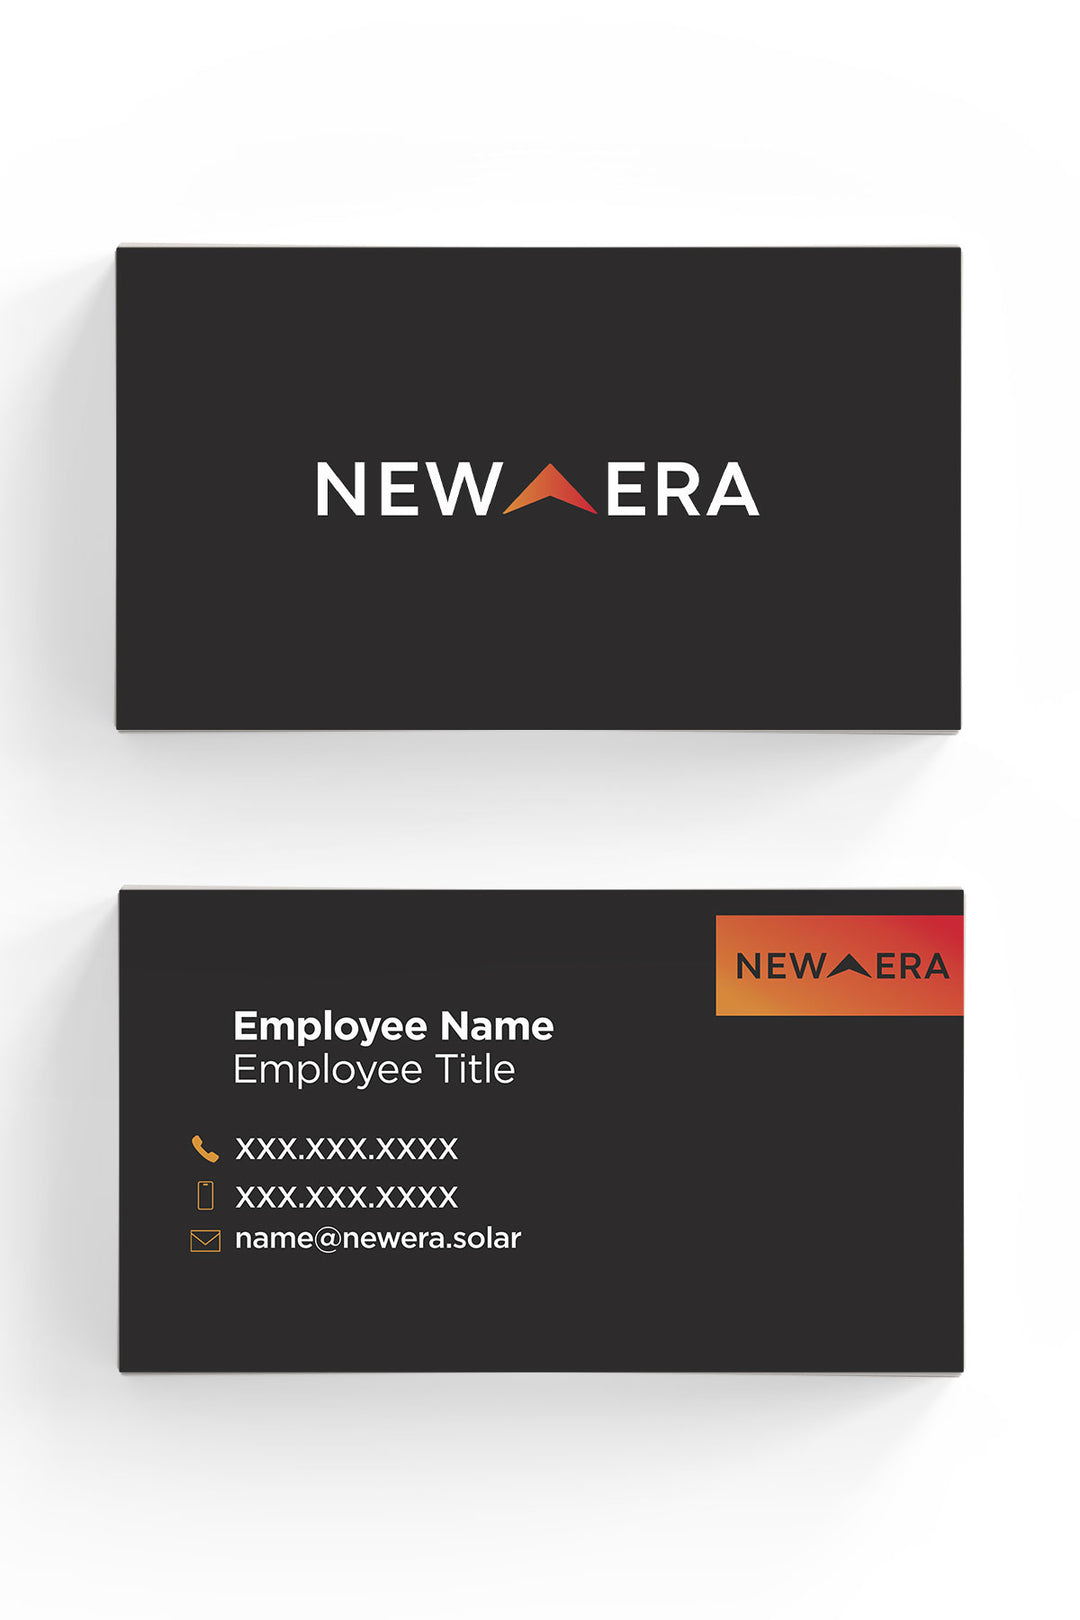 New Era Business Cards